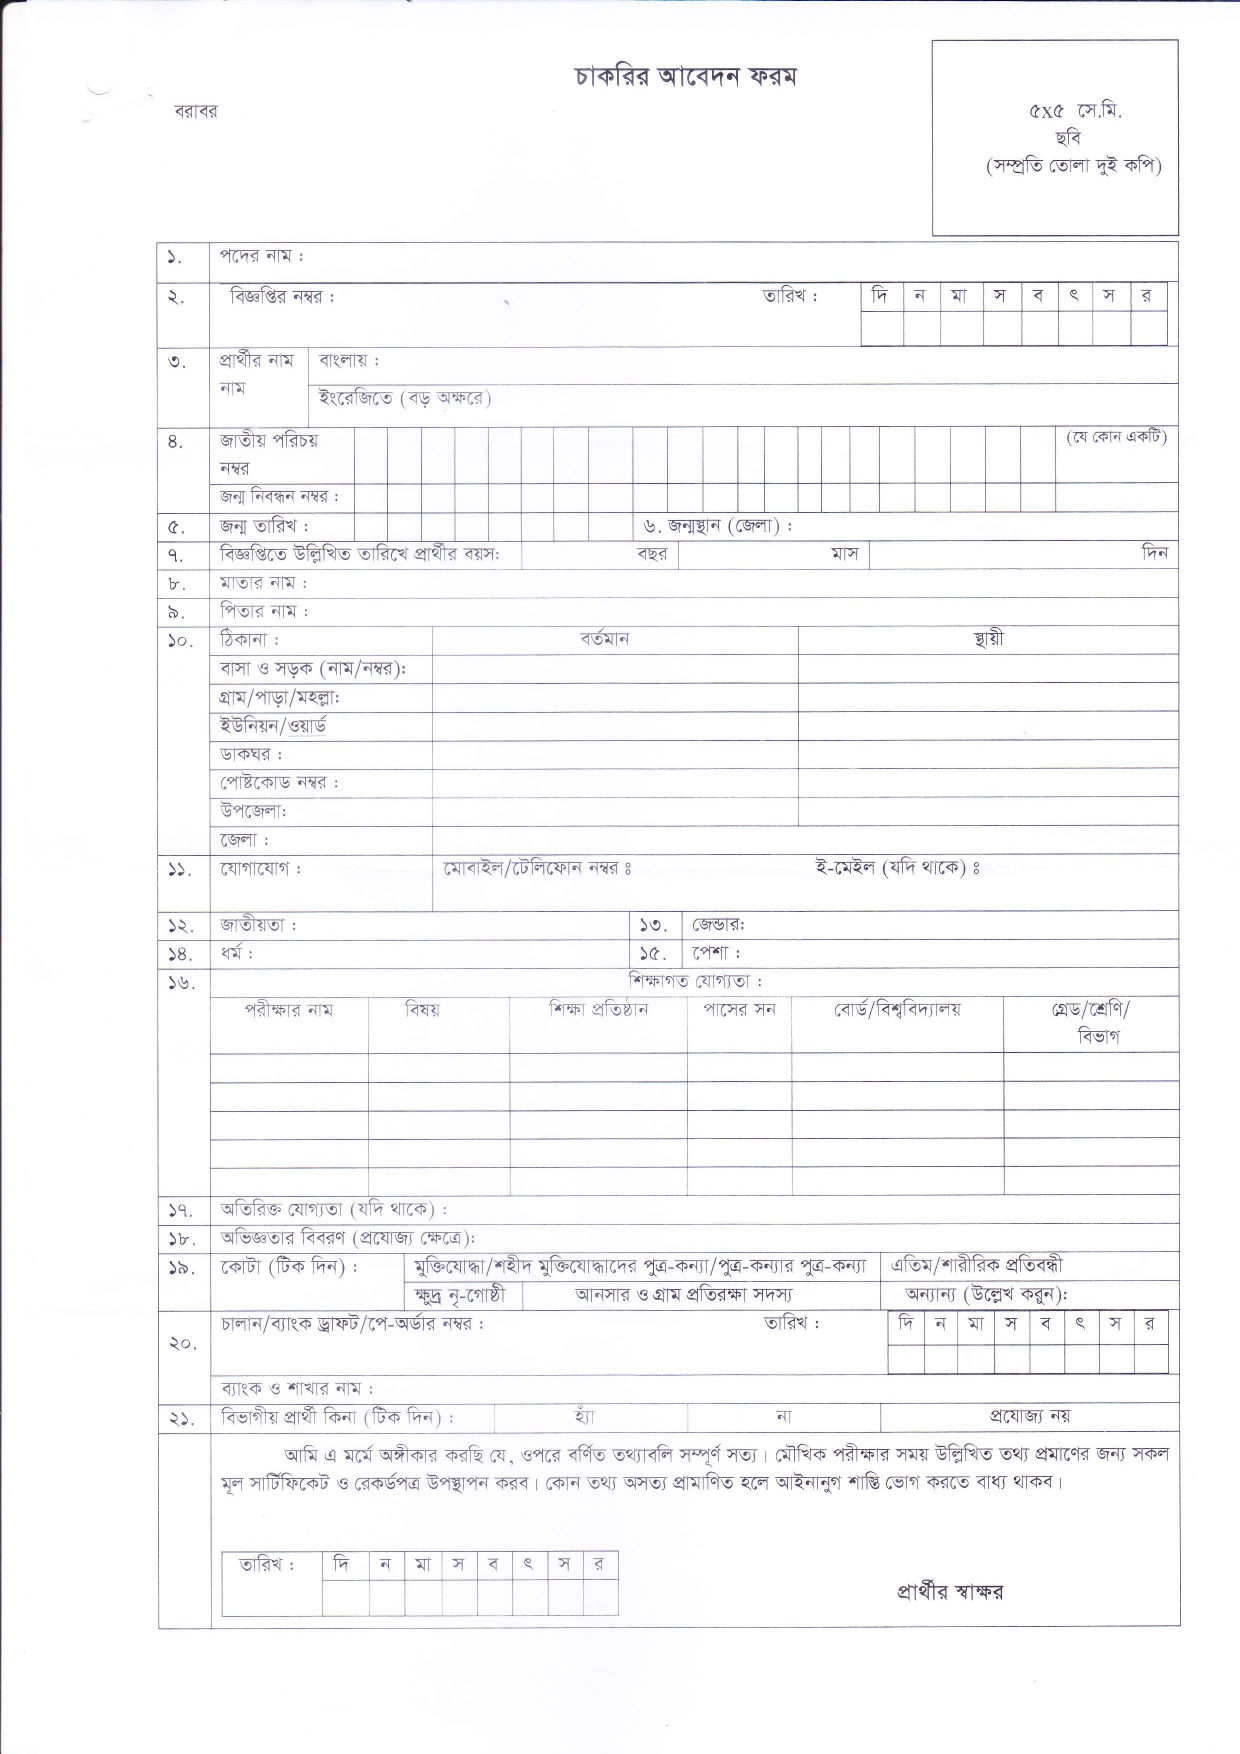 Bangladesh Police Super Office Job Form